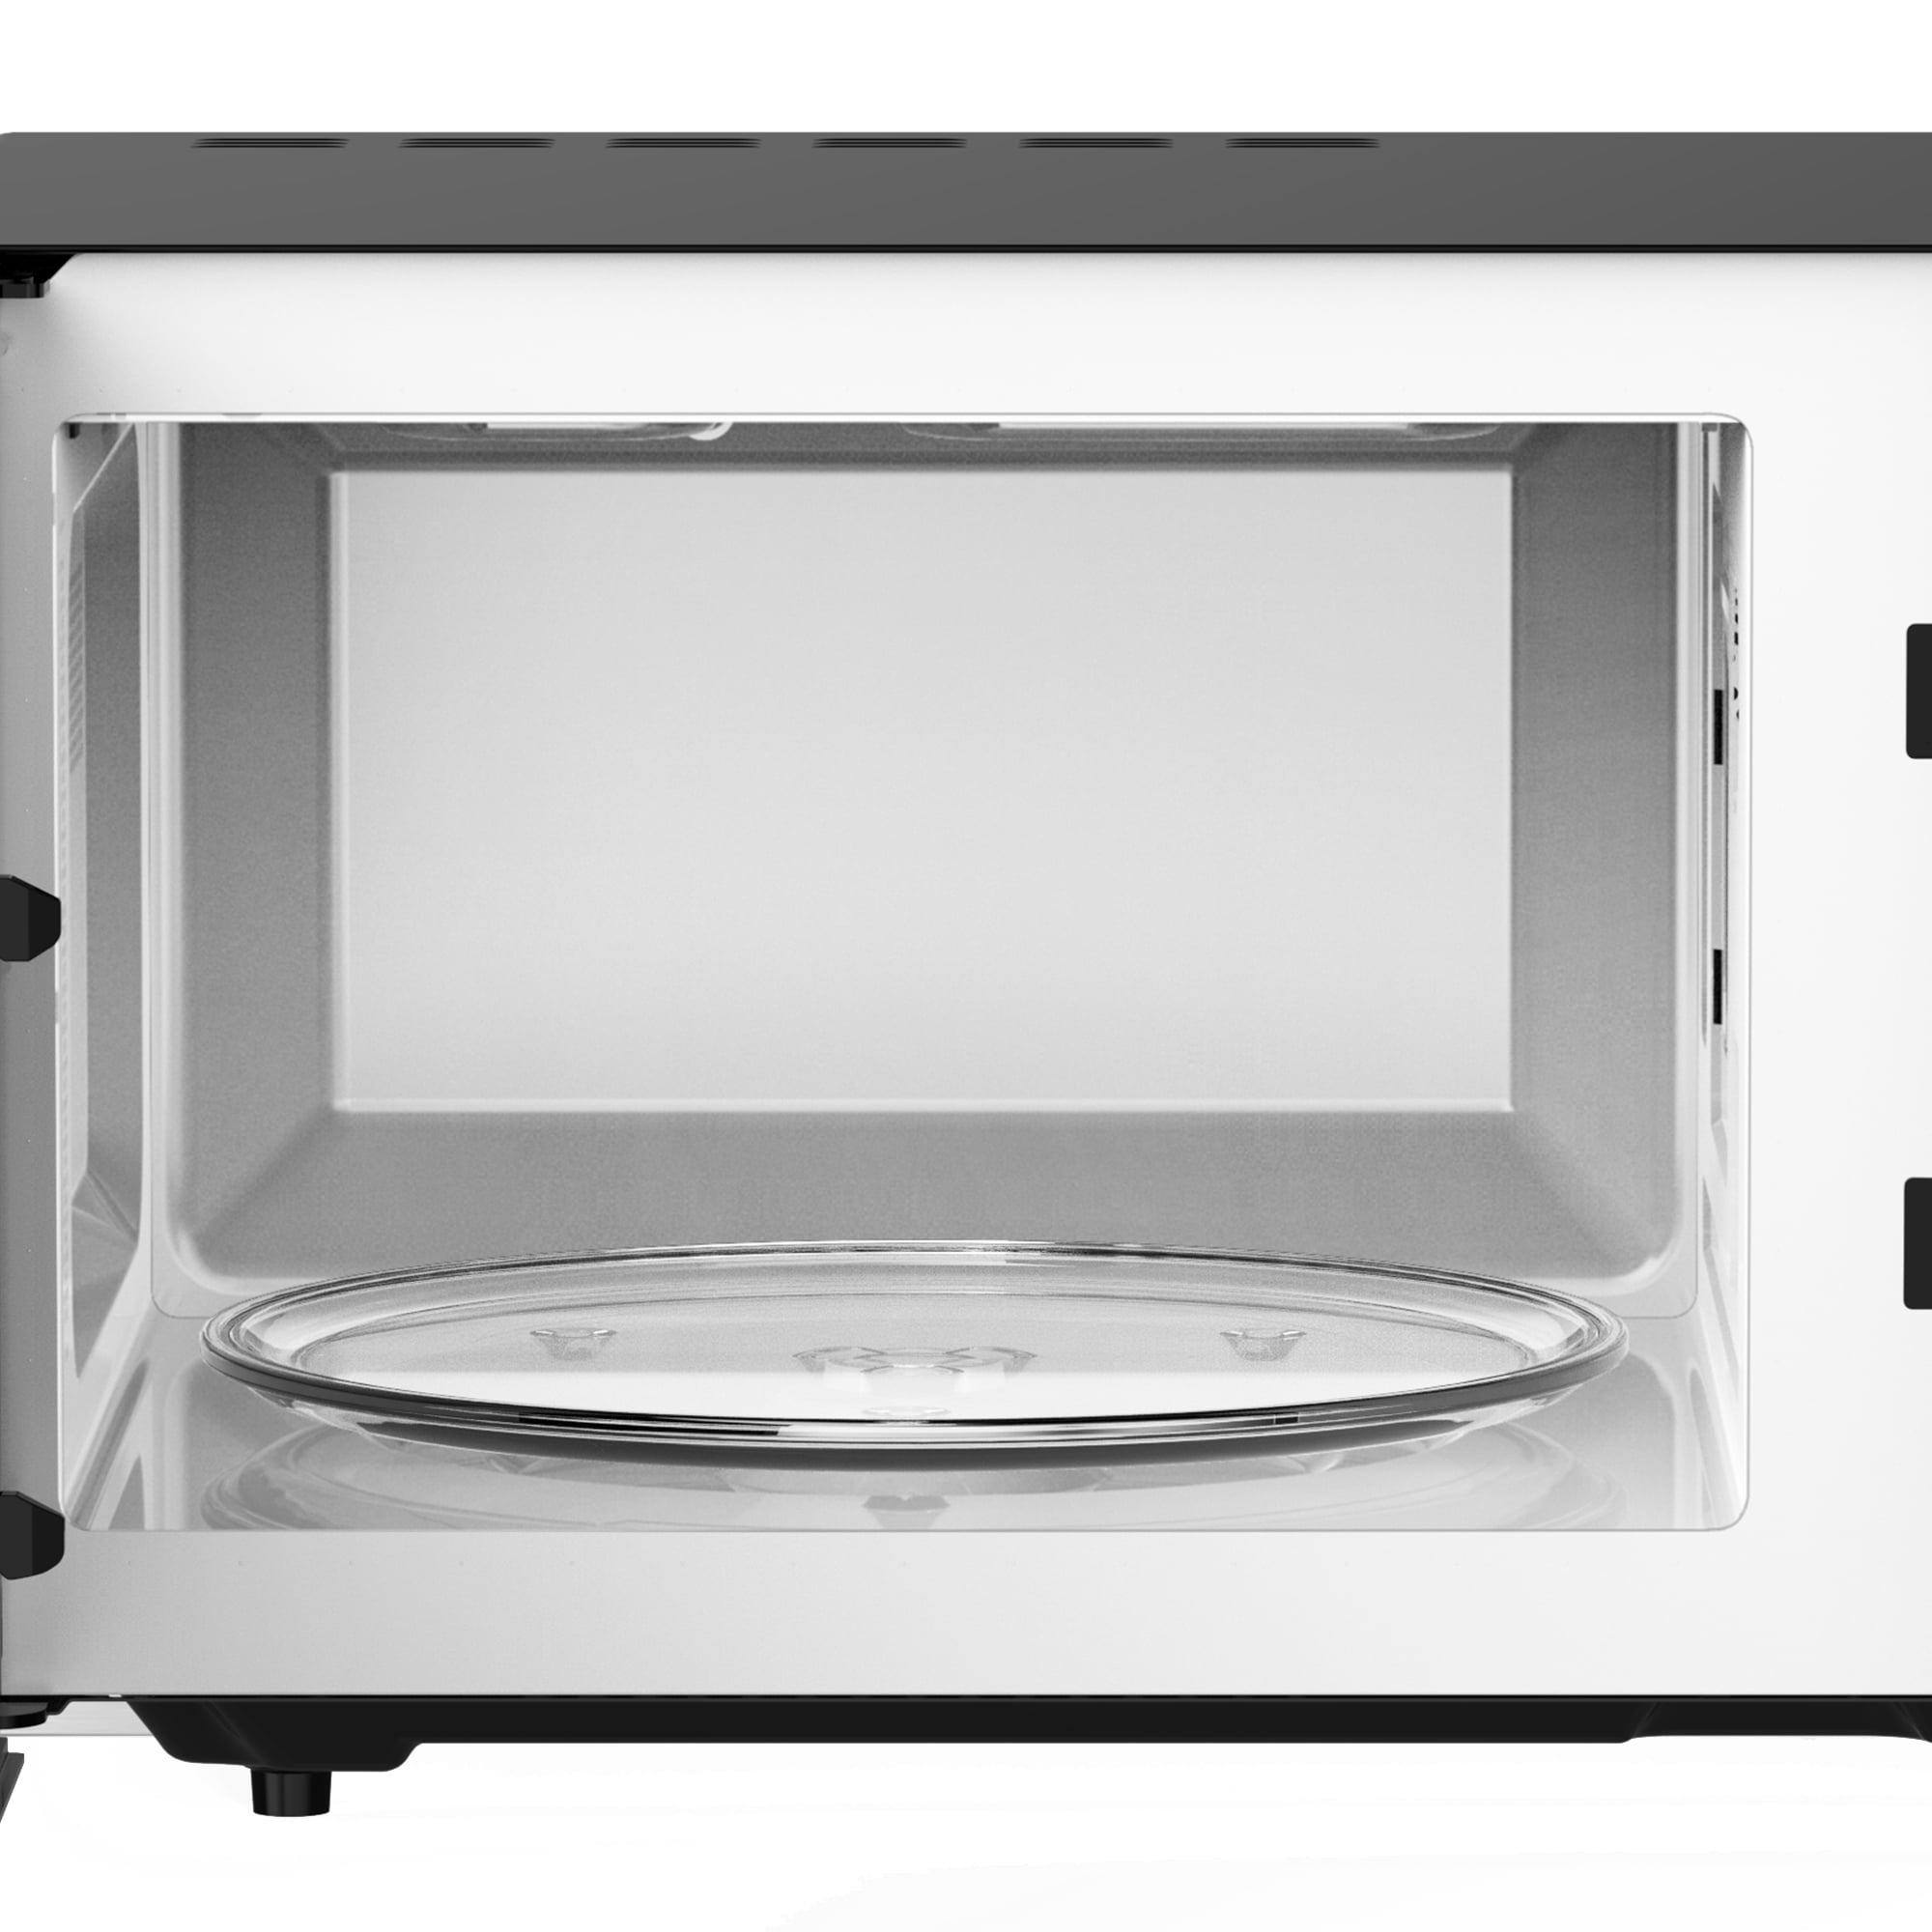 Black + Decker Em925afo P2 0.9 Cu. Ft. Microwave, Microwave Ovens, Furniture & Appliances